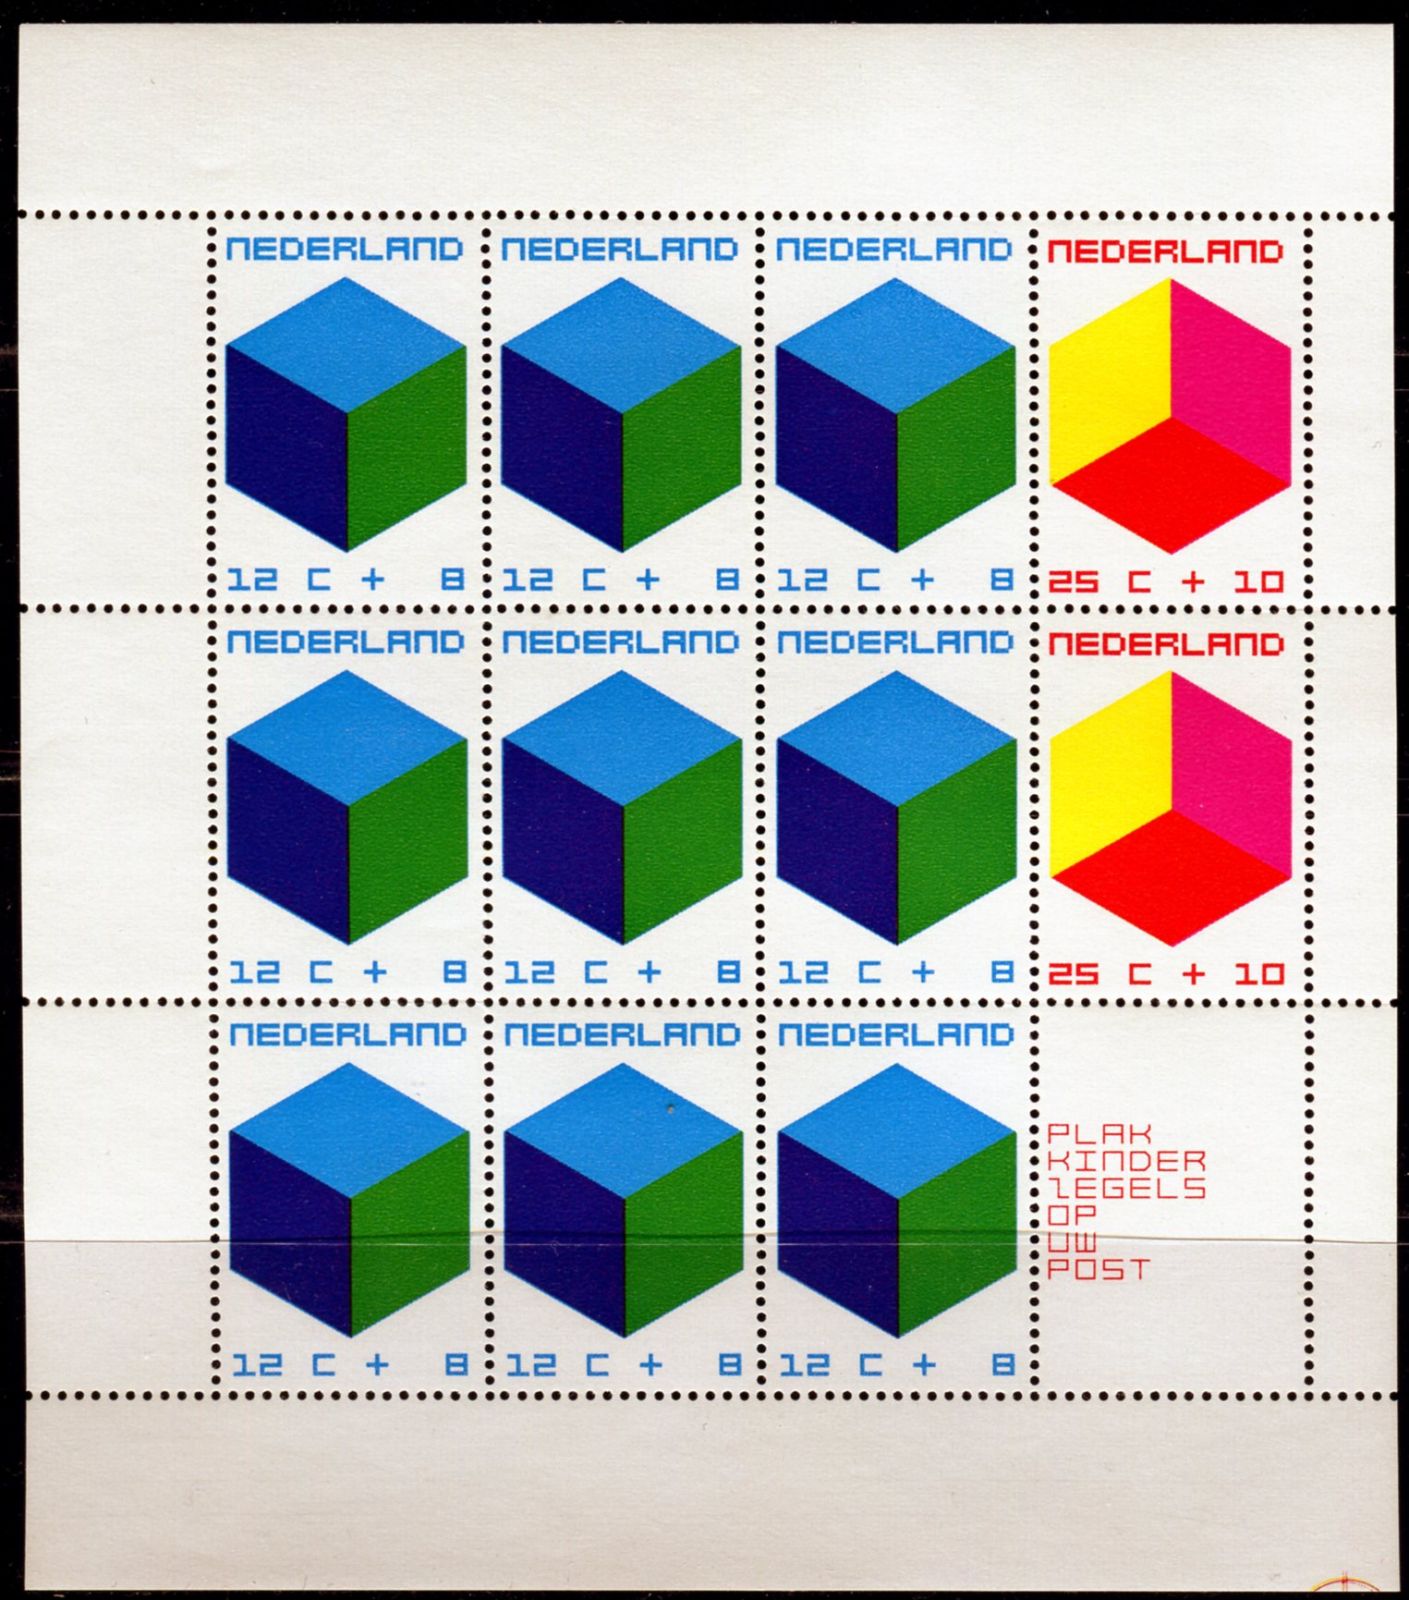 Nederland post (1970) MiNr. 951 - 955 ** - Nizozemsko - BLOCK 9 - "Mít dítě": barevné kostky